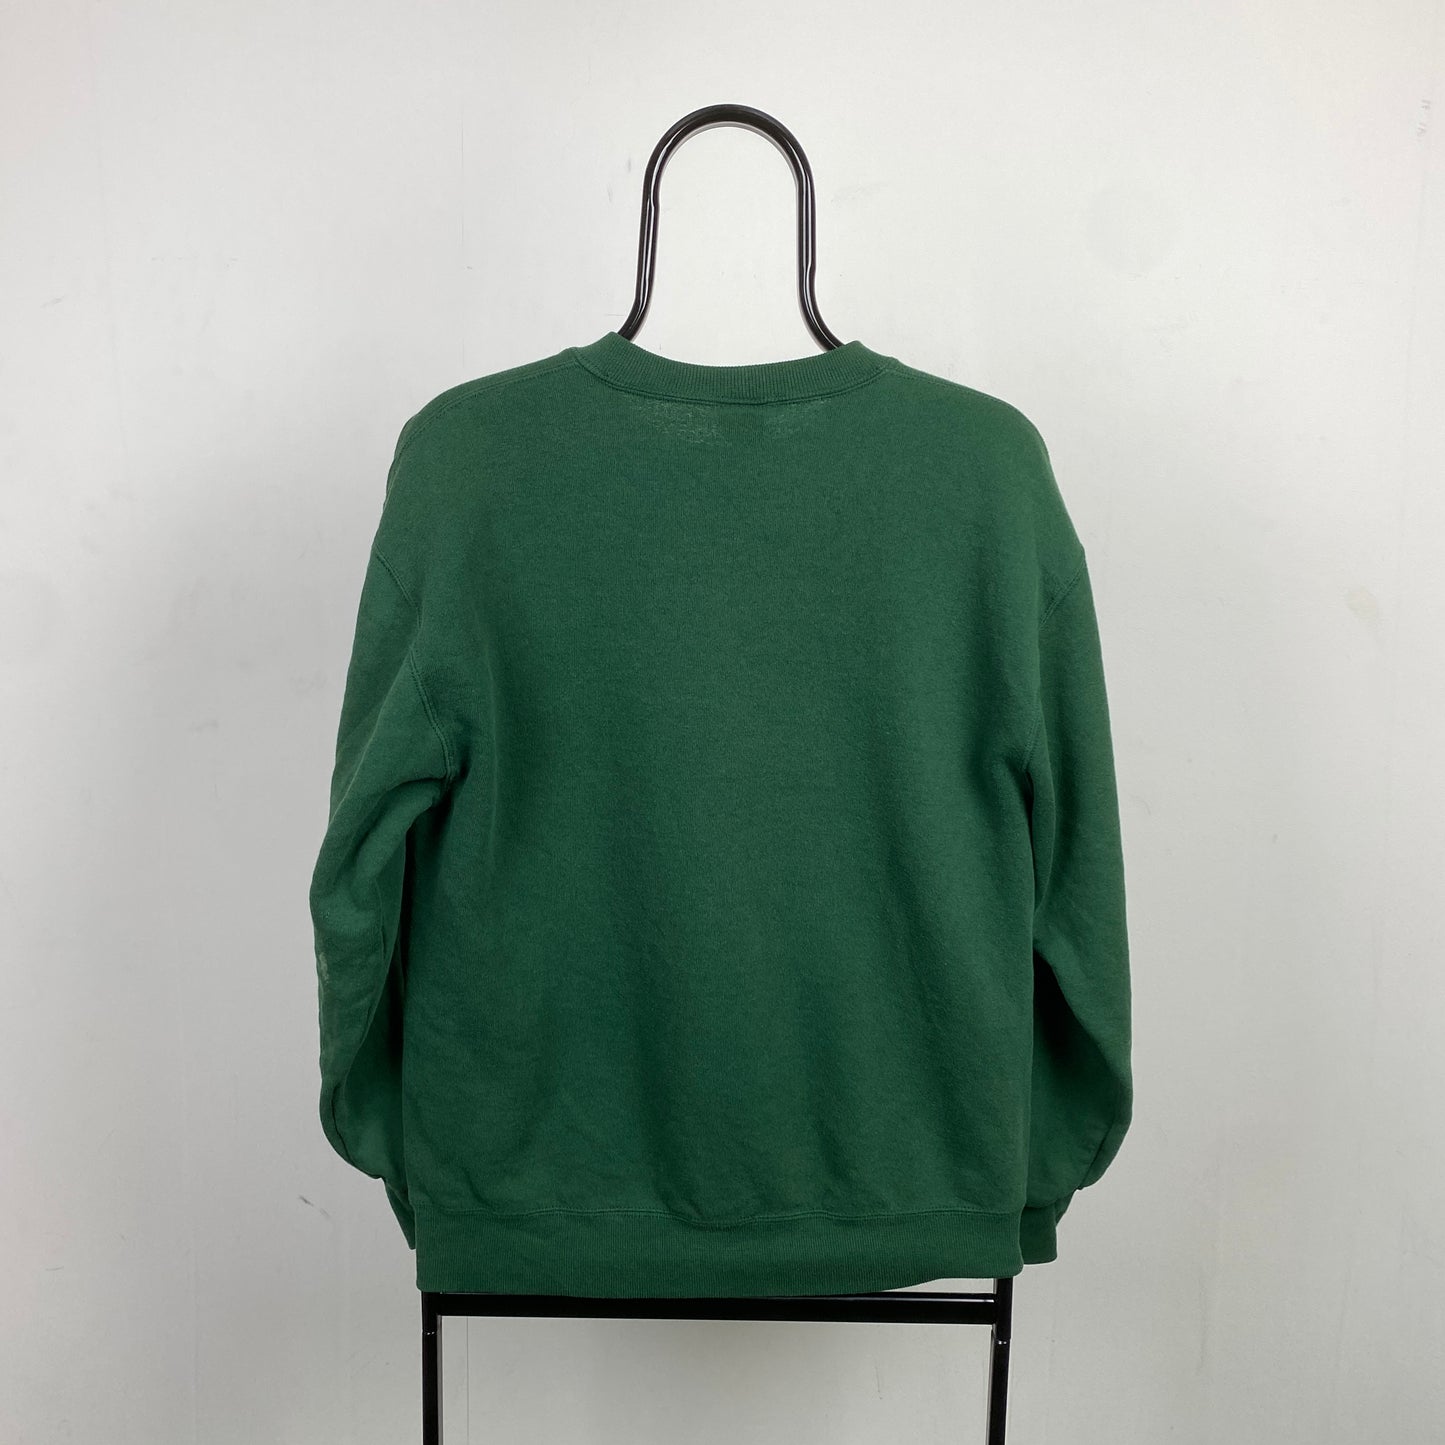 Retro Russell Athletic Michigan Sweatshirt Green Medium